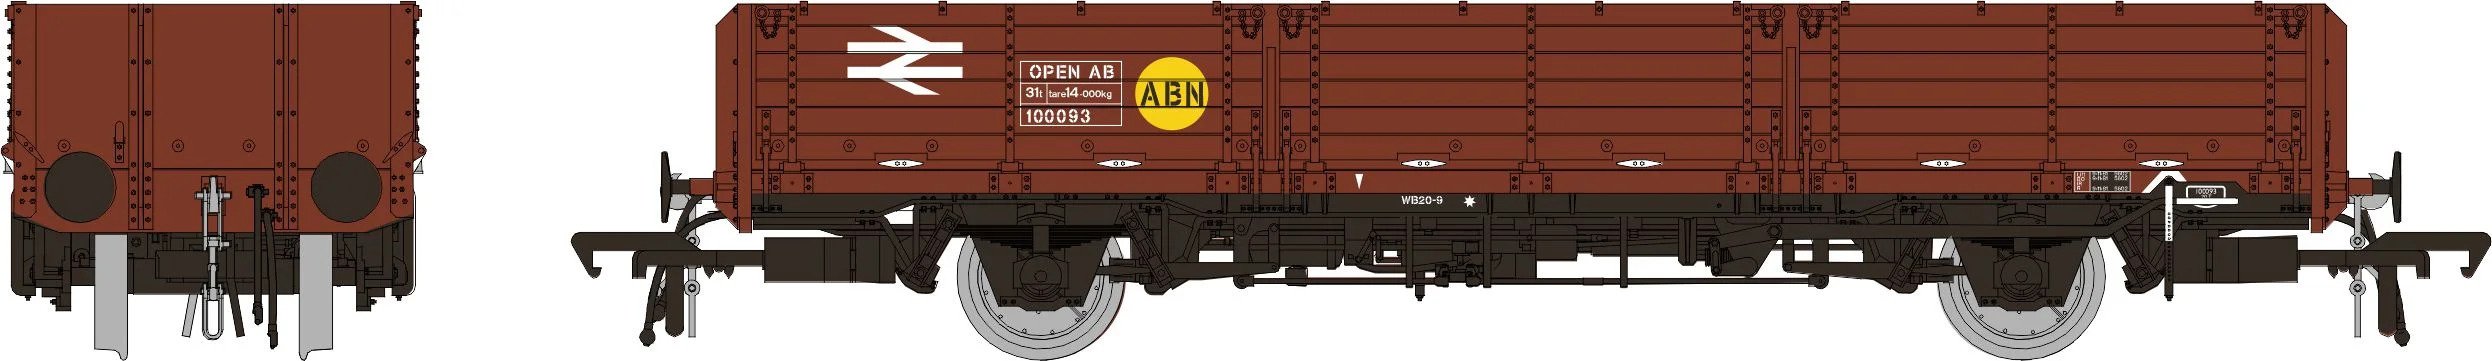 Rapido Trains 915001 OAA No. 100093, BR bauxite